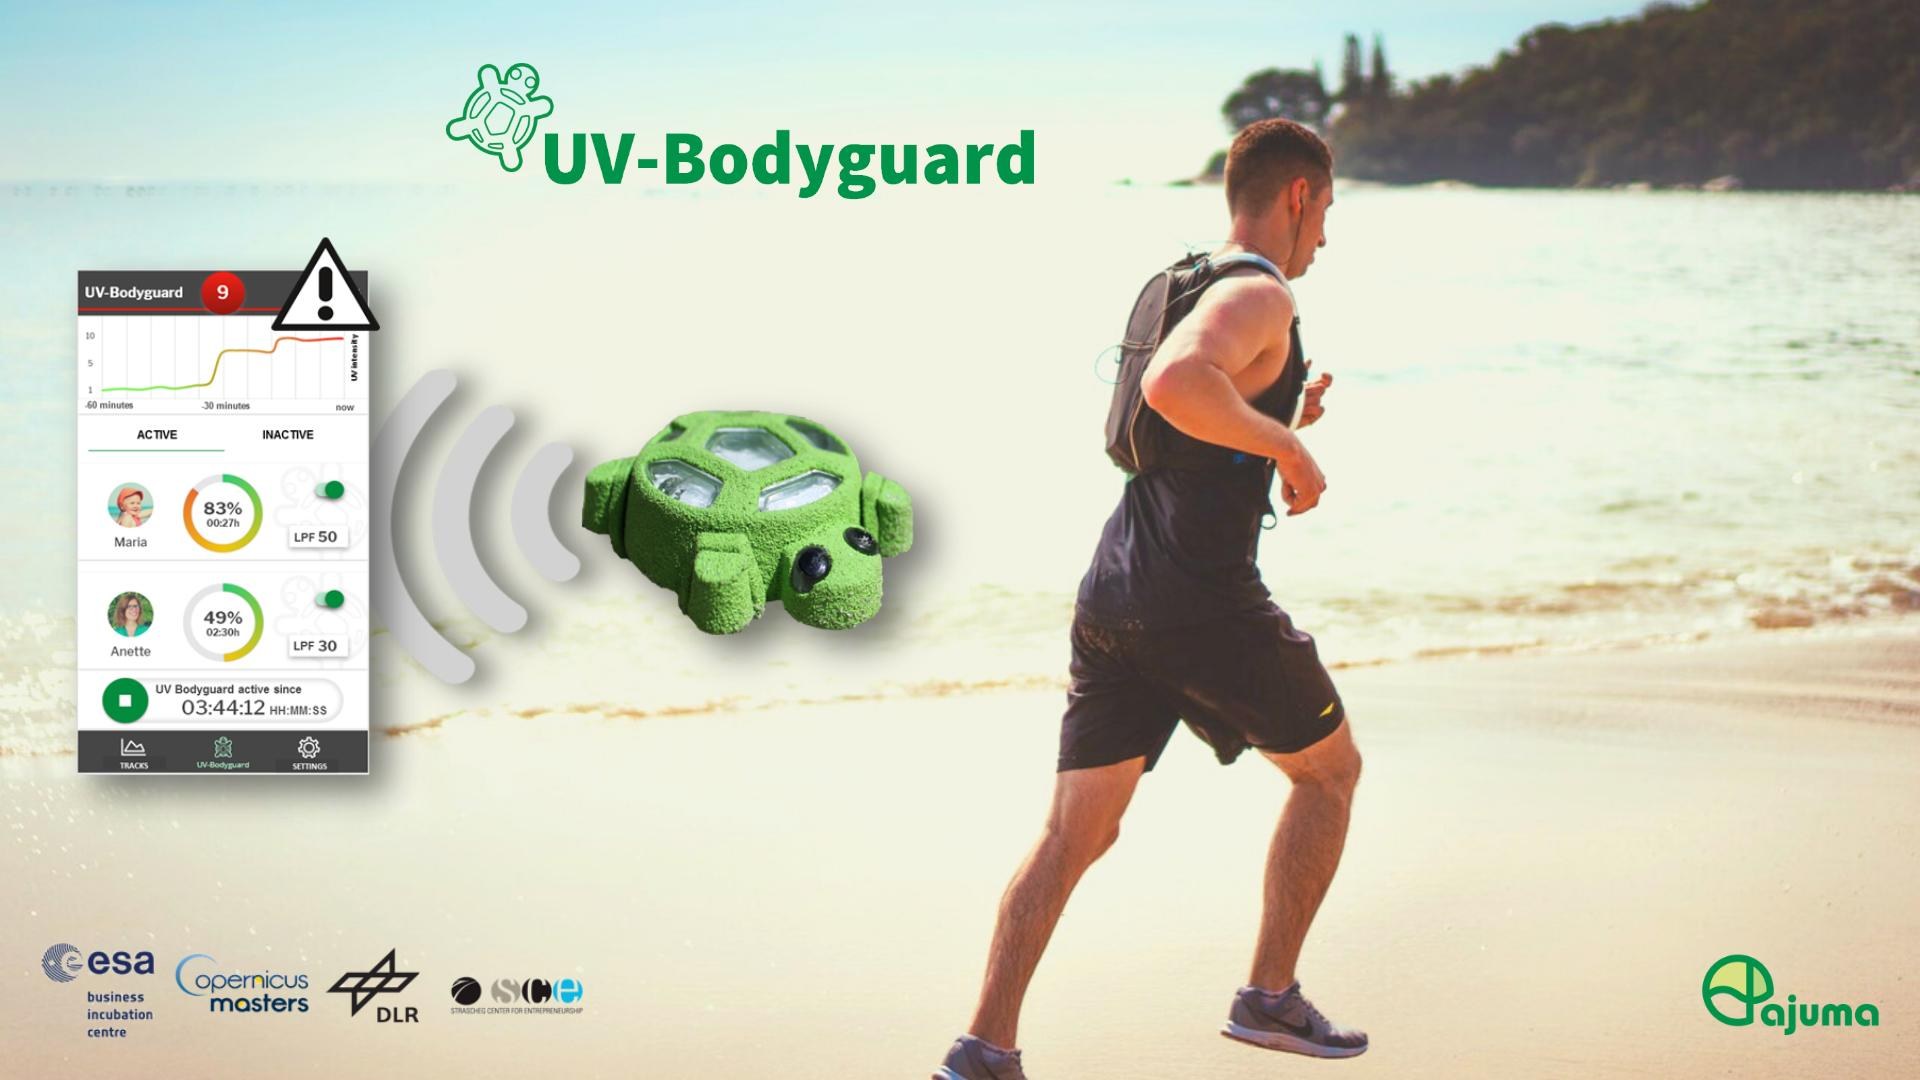 UV-Bodyguard by ajuma – also avoiding sunburn during sports